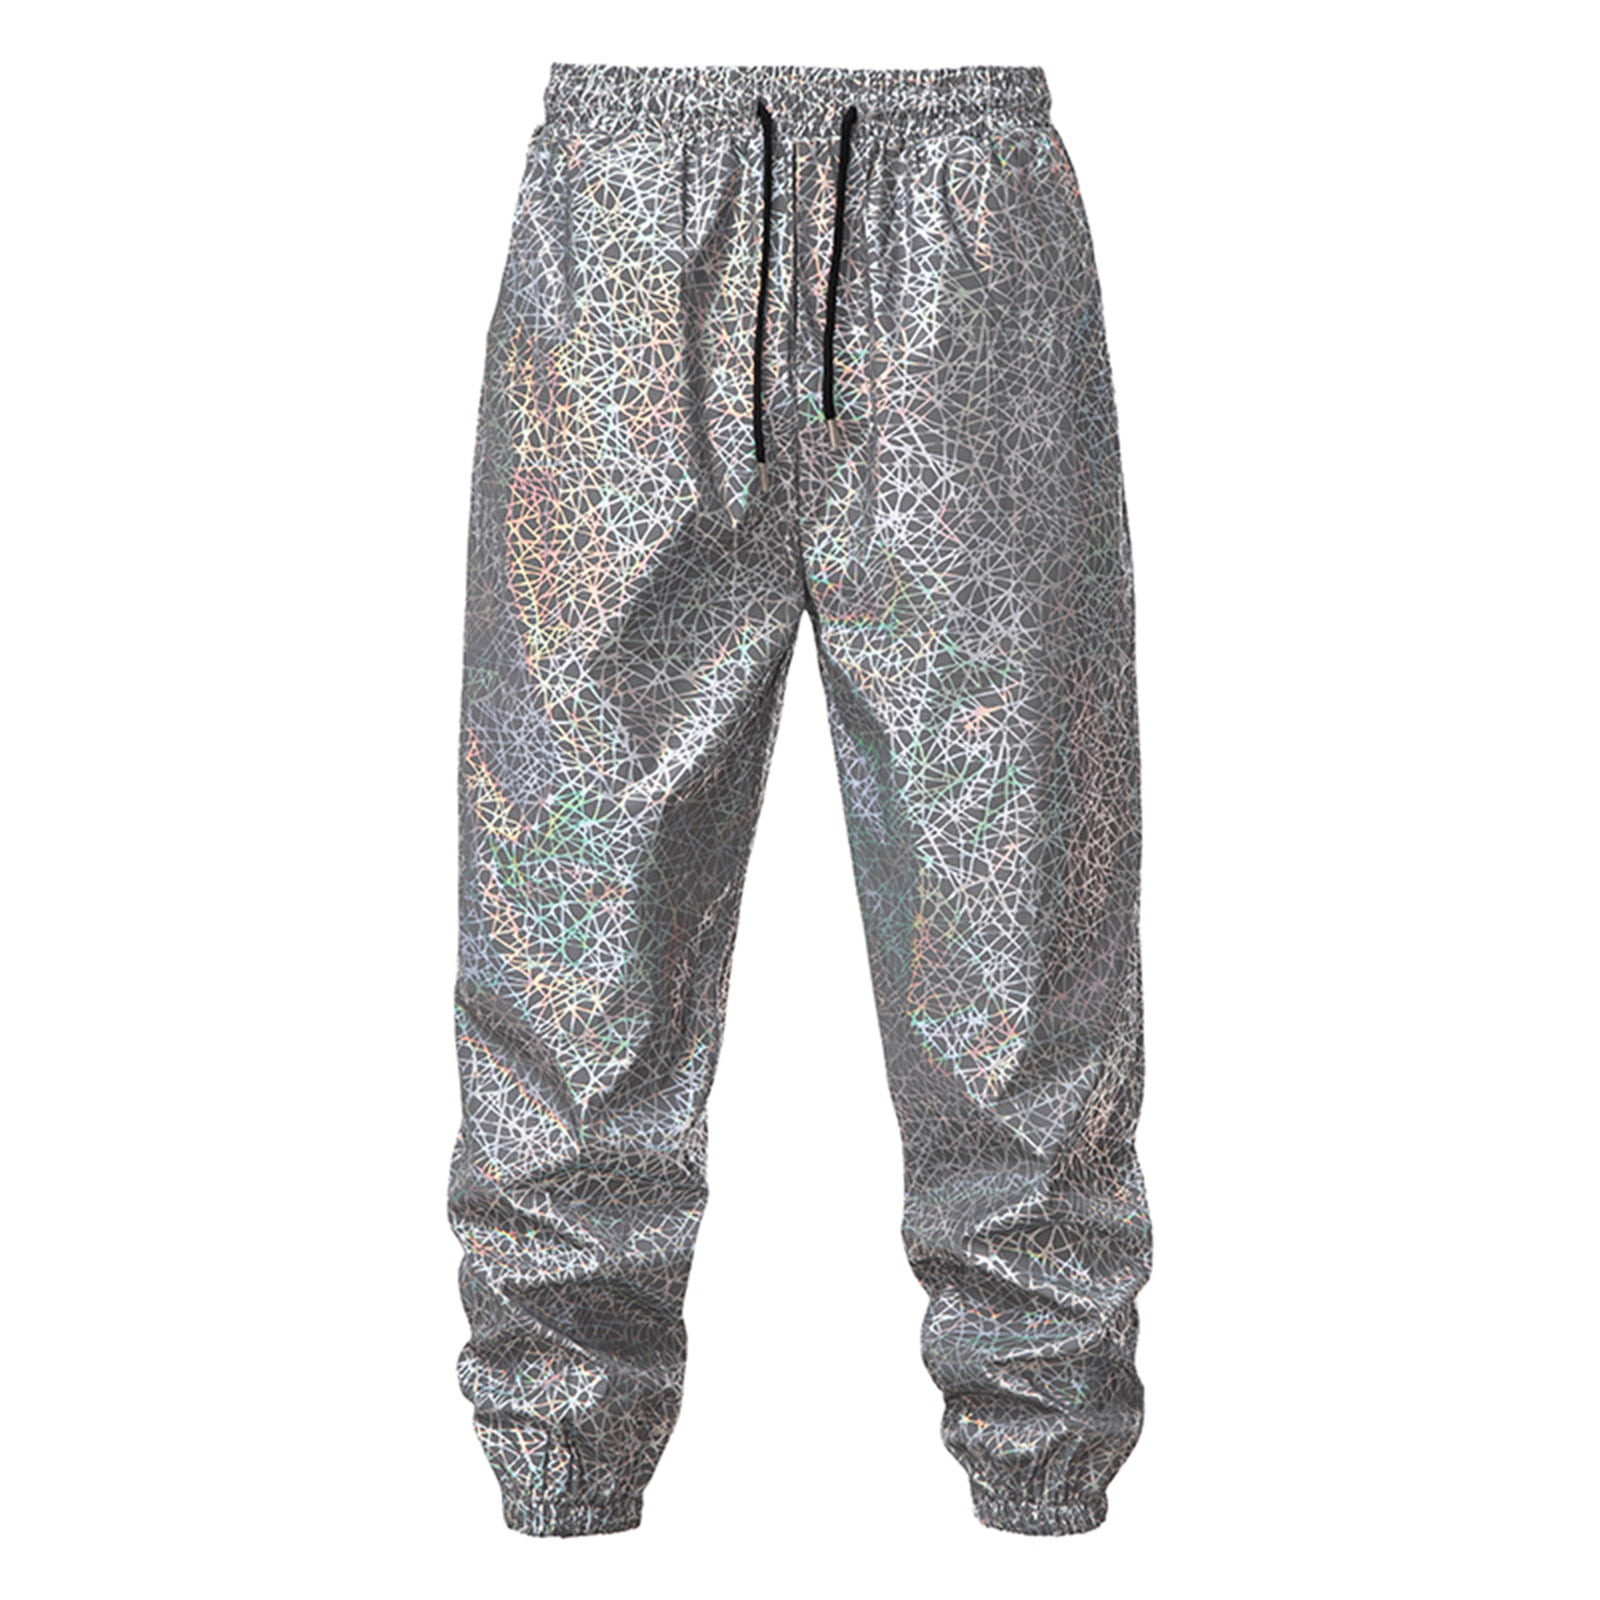 LZLRUN Reflective Pants Men Brand Hip Hop Dance Fluorescent Trousers Casual Harajuku Night Sporting Jogger Pants Gray